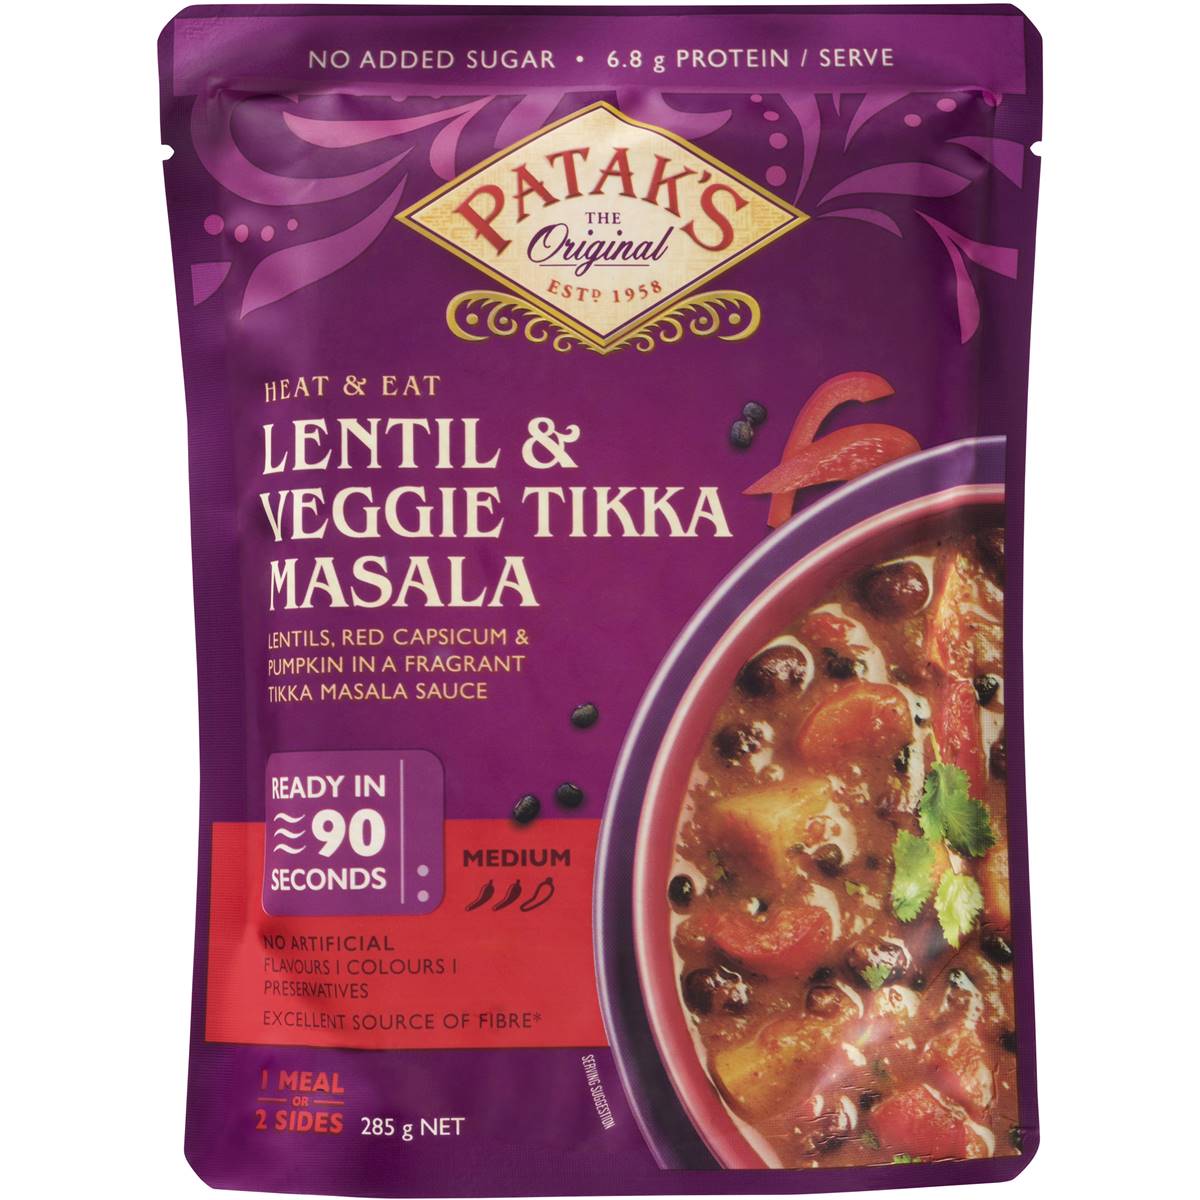 Calories in Patak's Lentil & Veggie Tikka Masala Heat & Eat Pouch